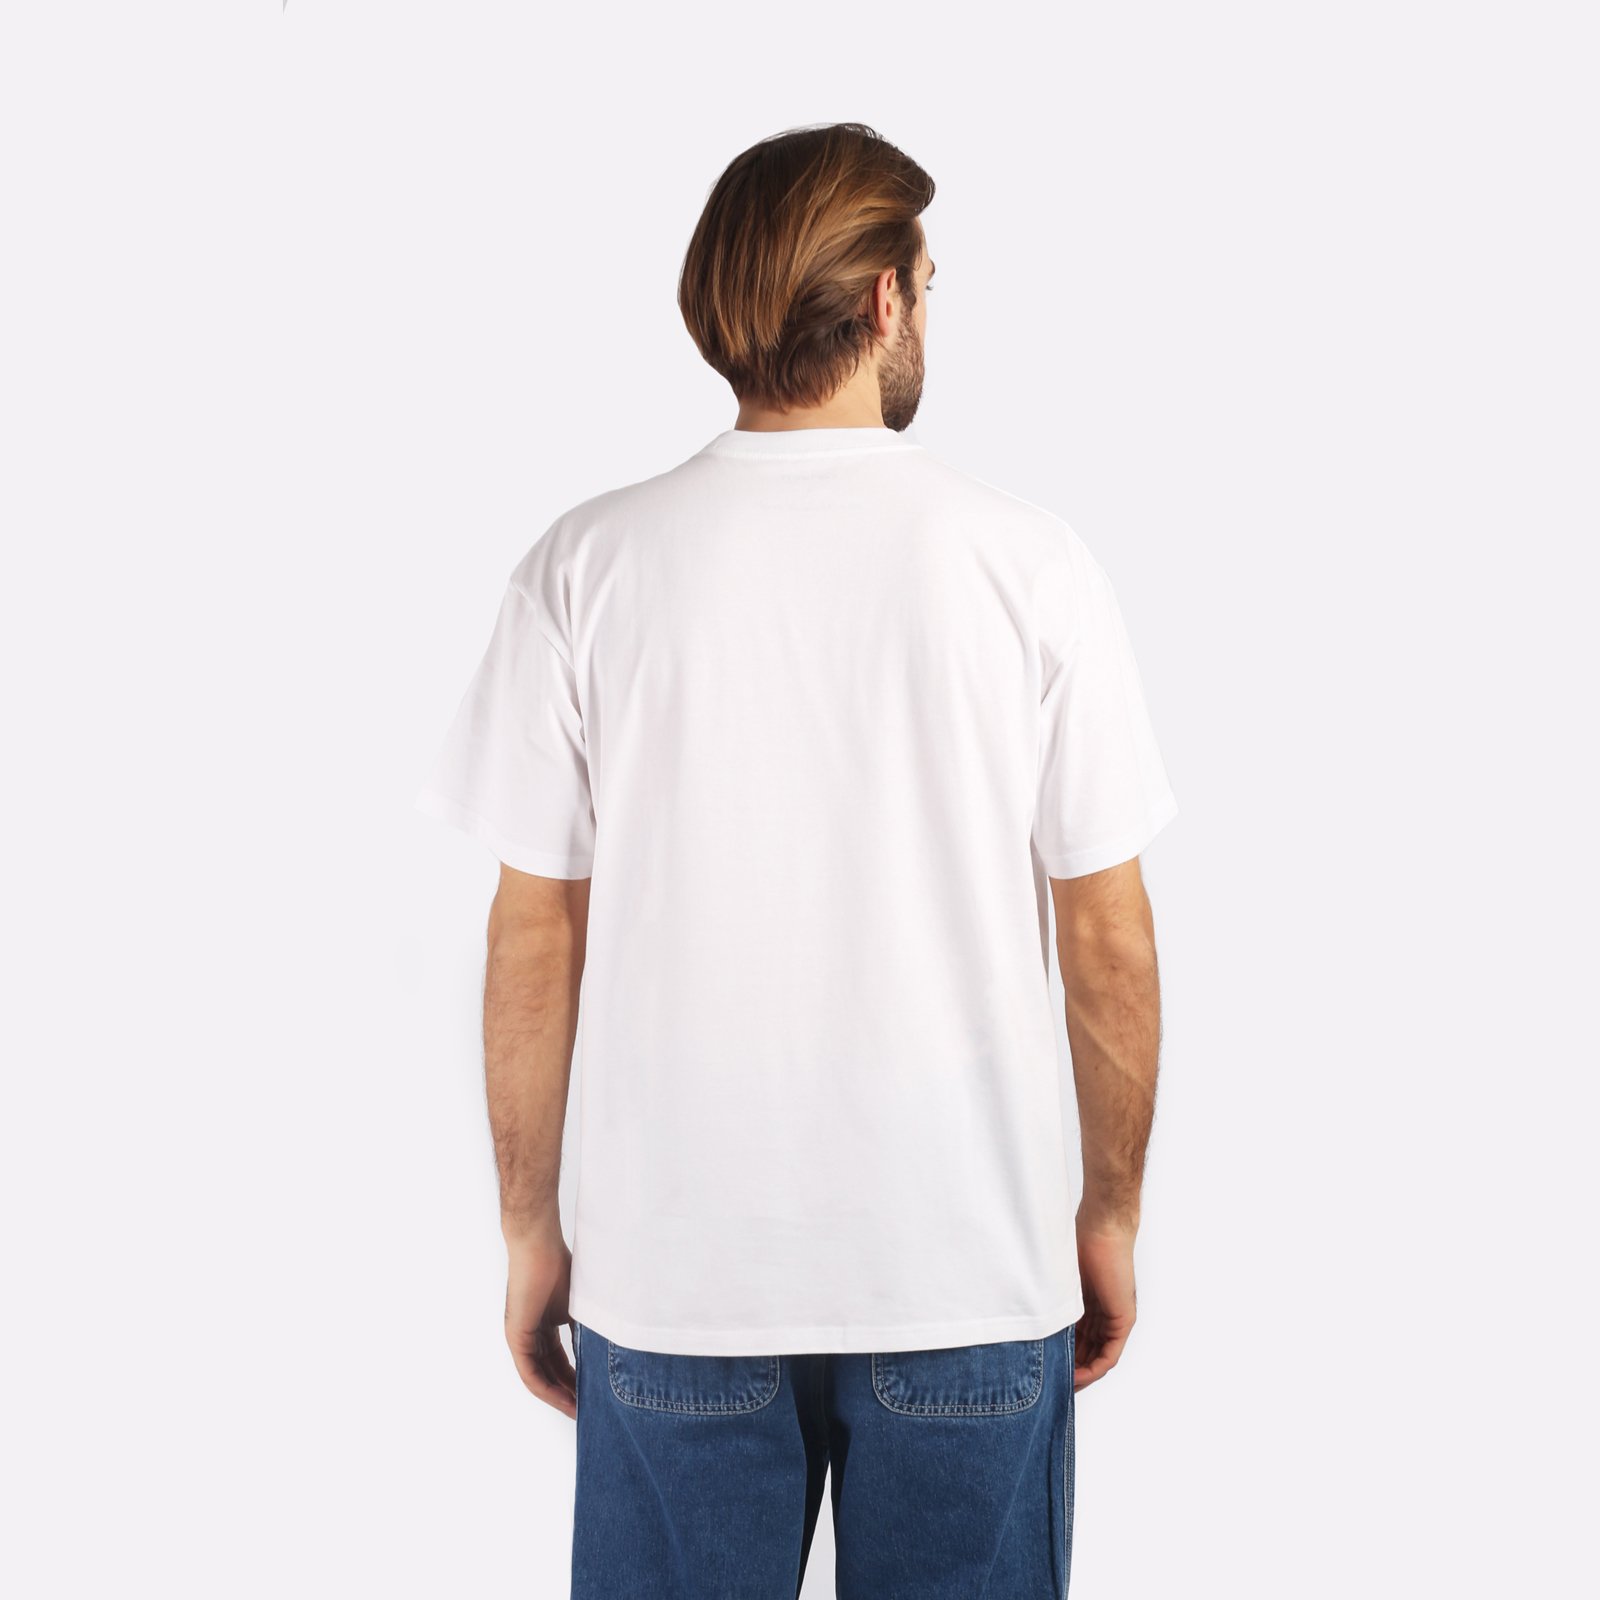 мужская футболка Carhartt WIP S/S Ollie Mac Icy Lake T-S  (I032408-white)  - цена, описание, фото 2